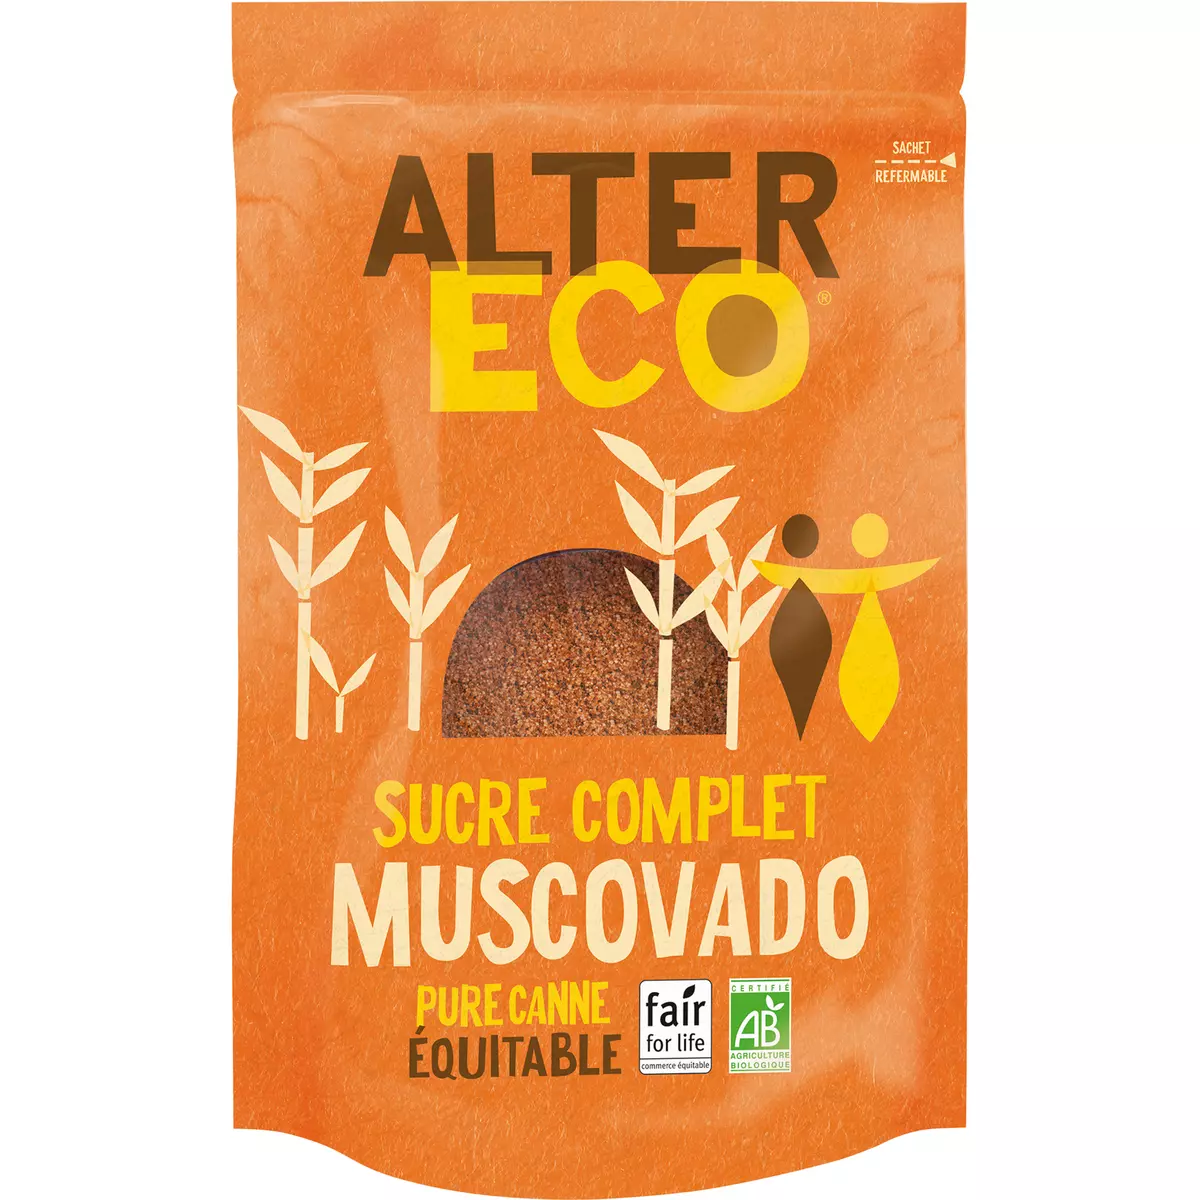 Sucre de coco brun bio équitable 500g - Nutri Naturel